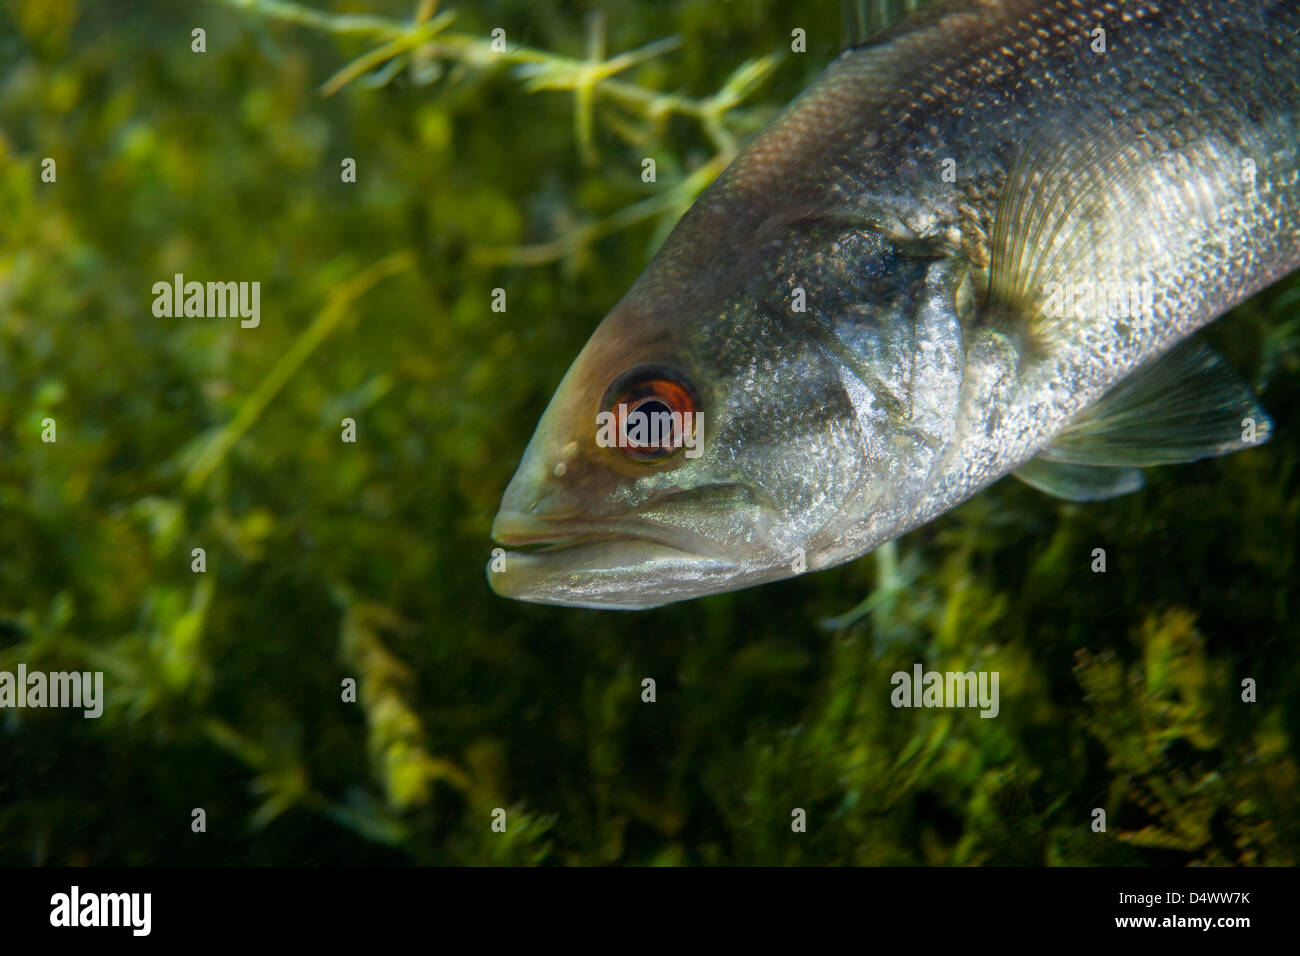 A close-up view of an adolescent Florida Largemouth Bass. Stock Photo